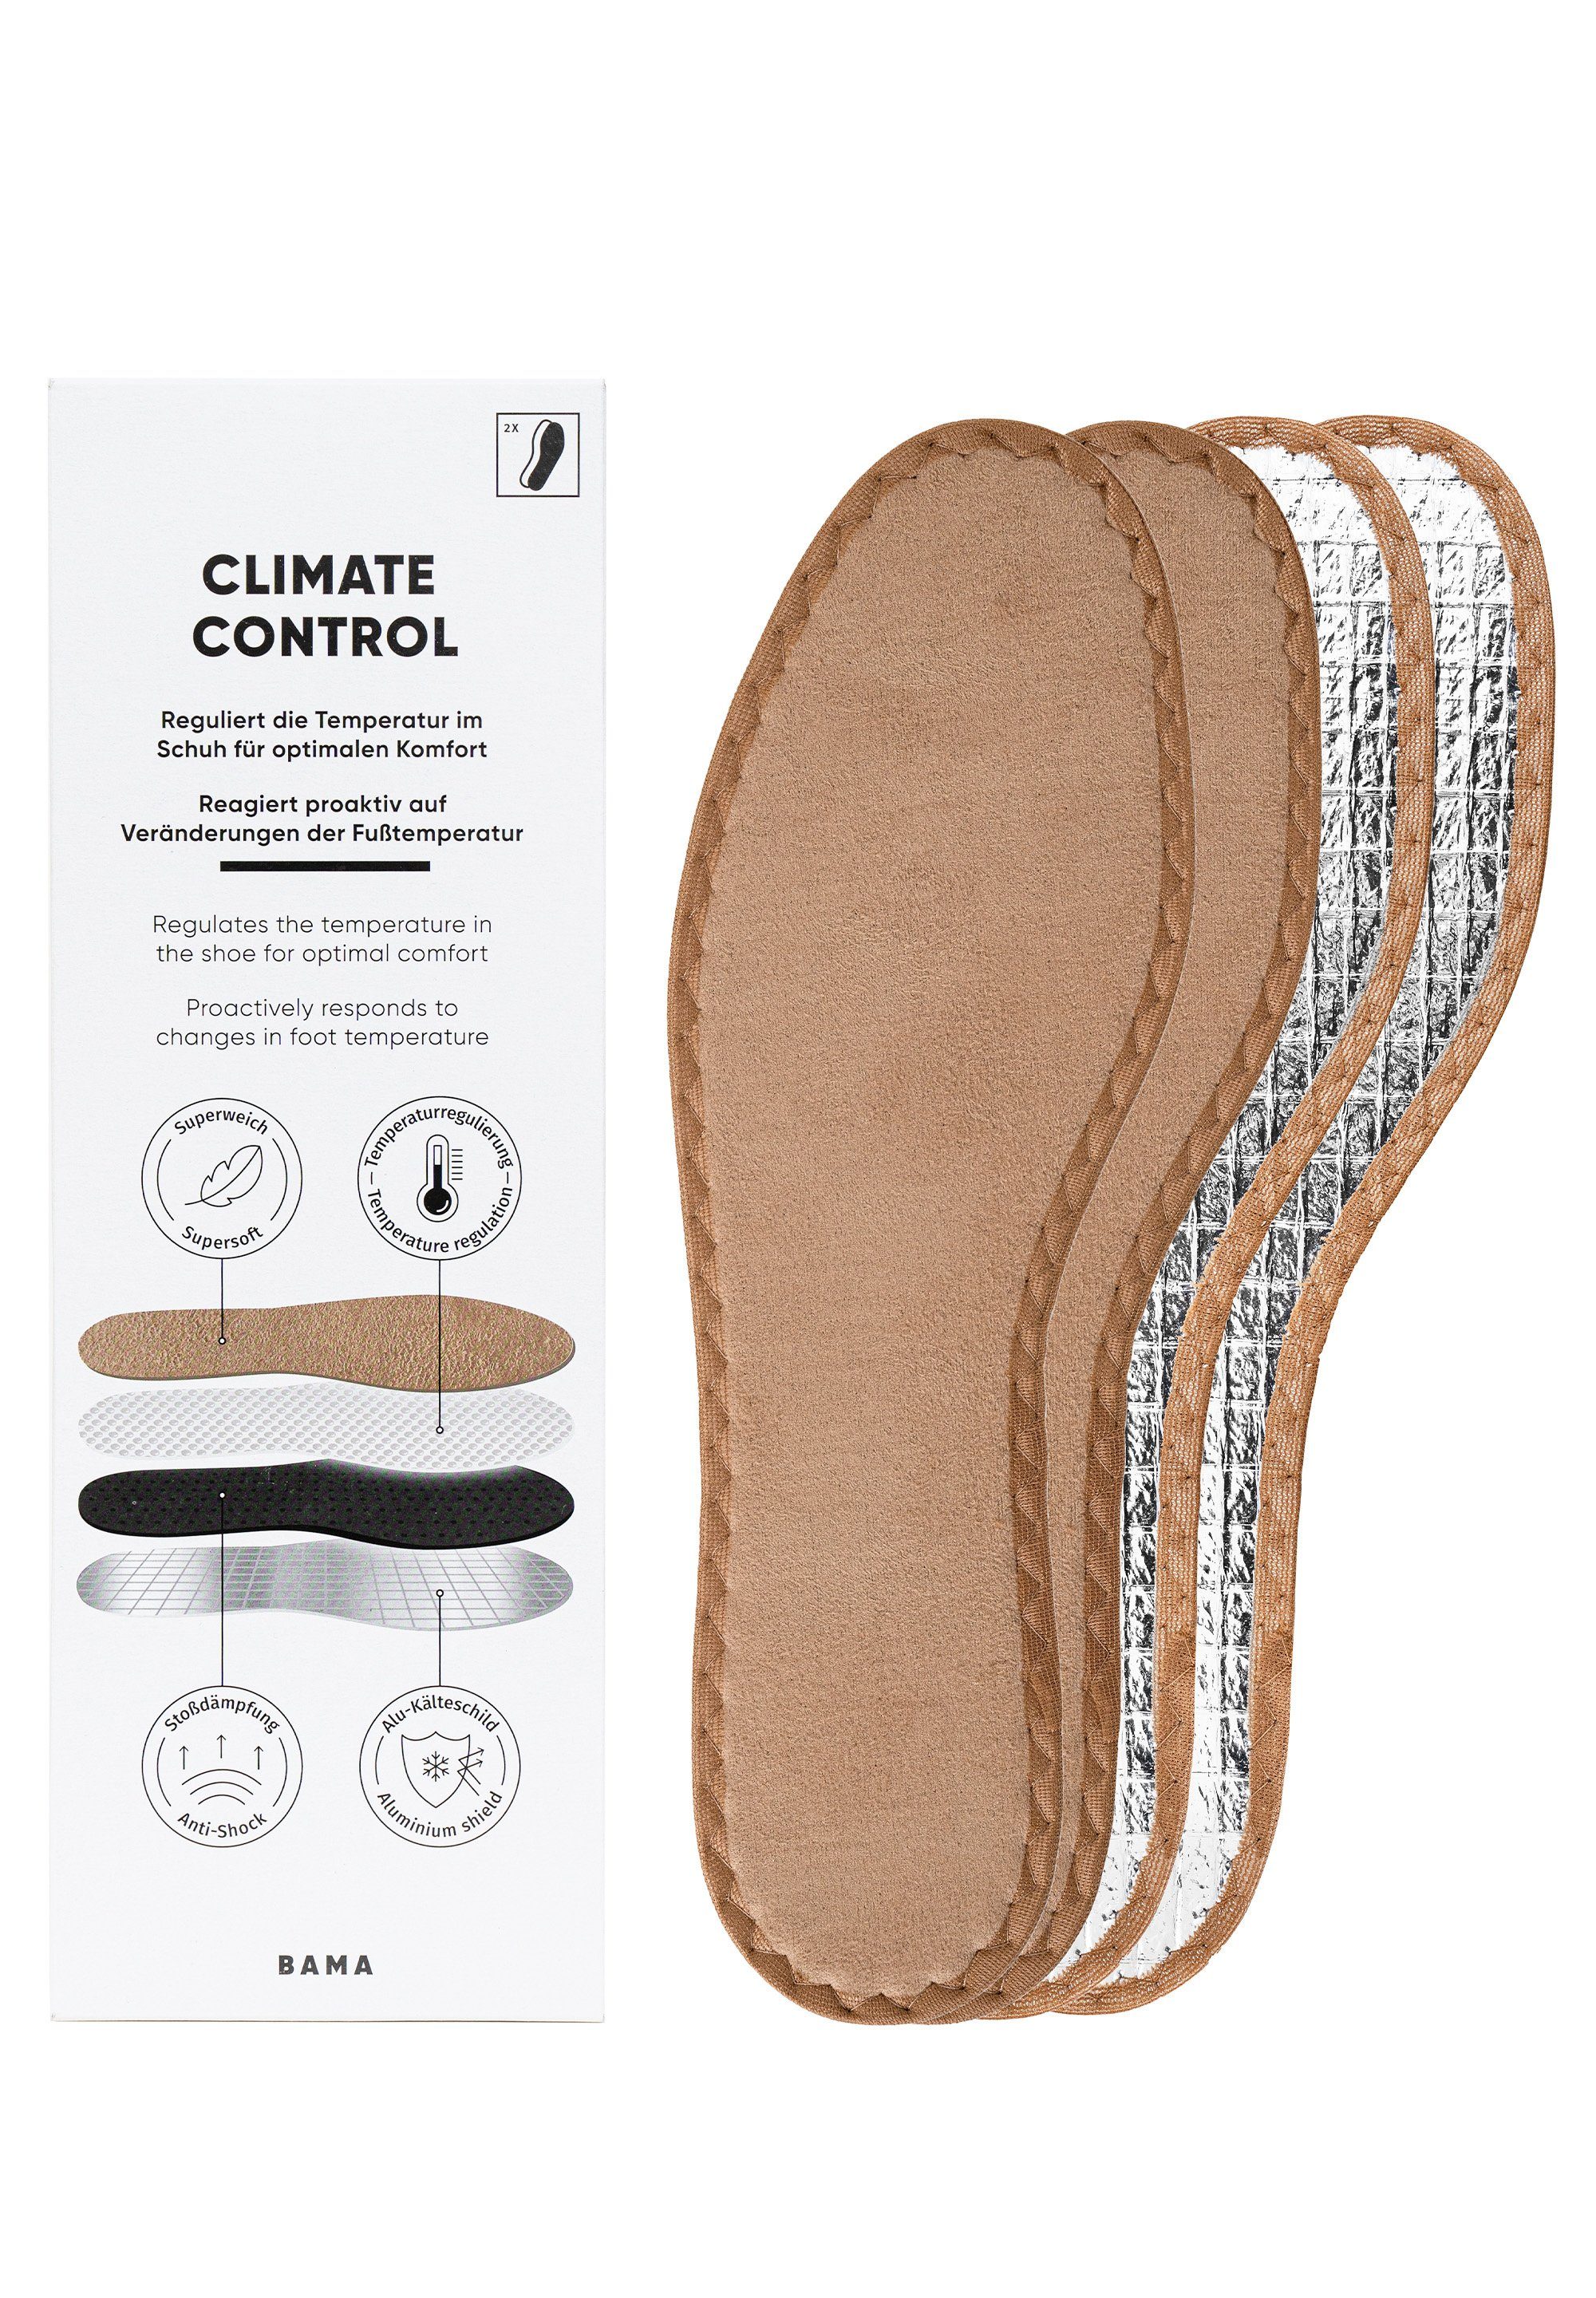 BAMA Group Einlegesohlen BAMA Climate Control - wärmende Sohle 2er Pack, Doppelpack, wärmespeichernde und temperaturregulierende Schuhsohle